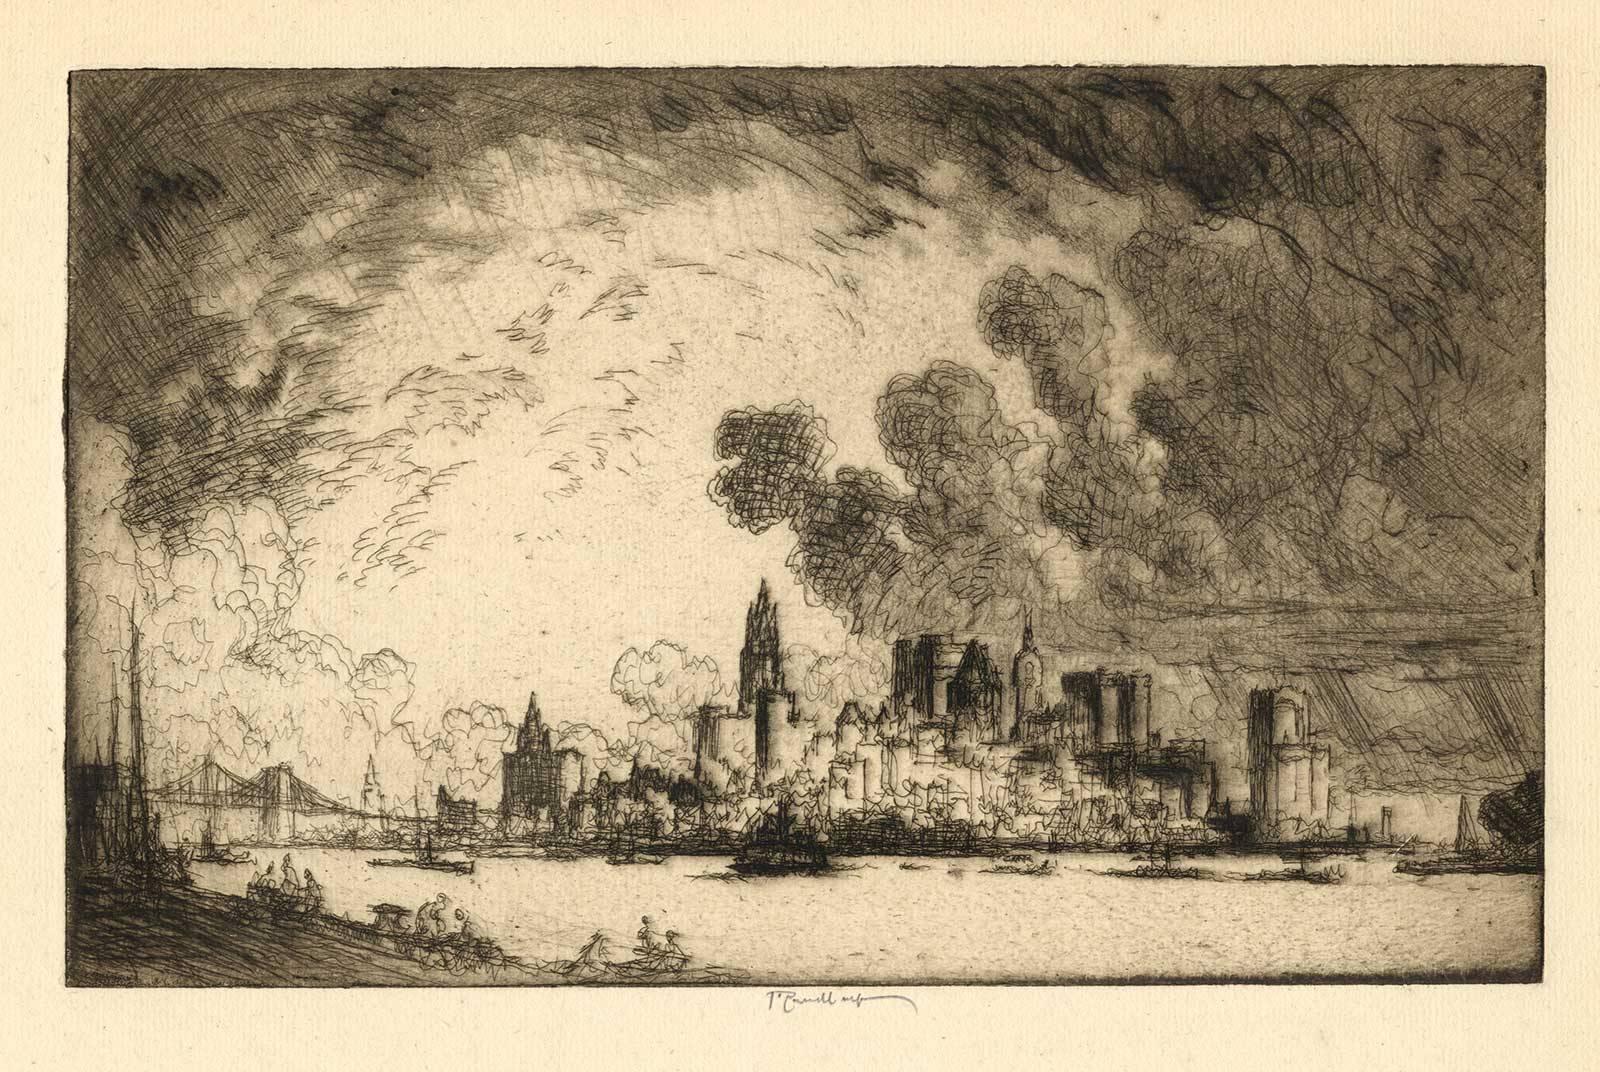 Joseph Pennell Print - New York From Brooklyn (historical skyline of Manhattan with Brooklyn Bridge)